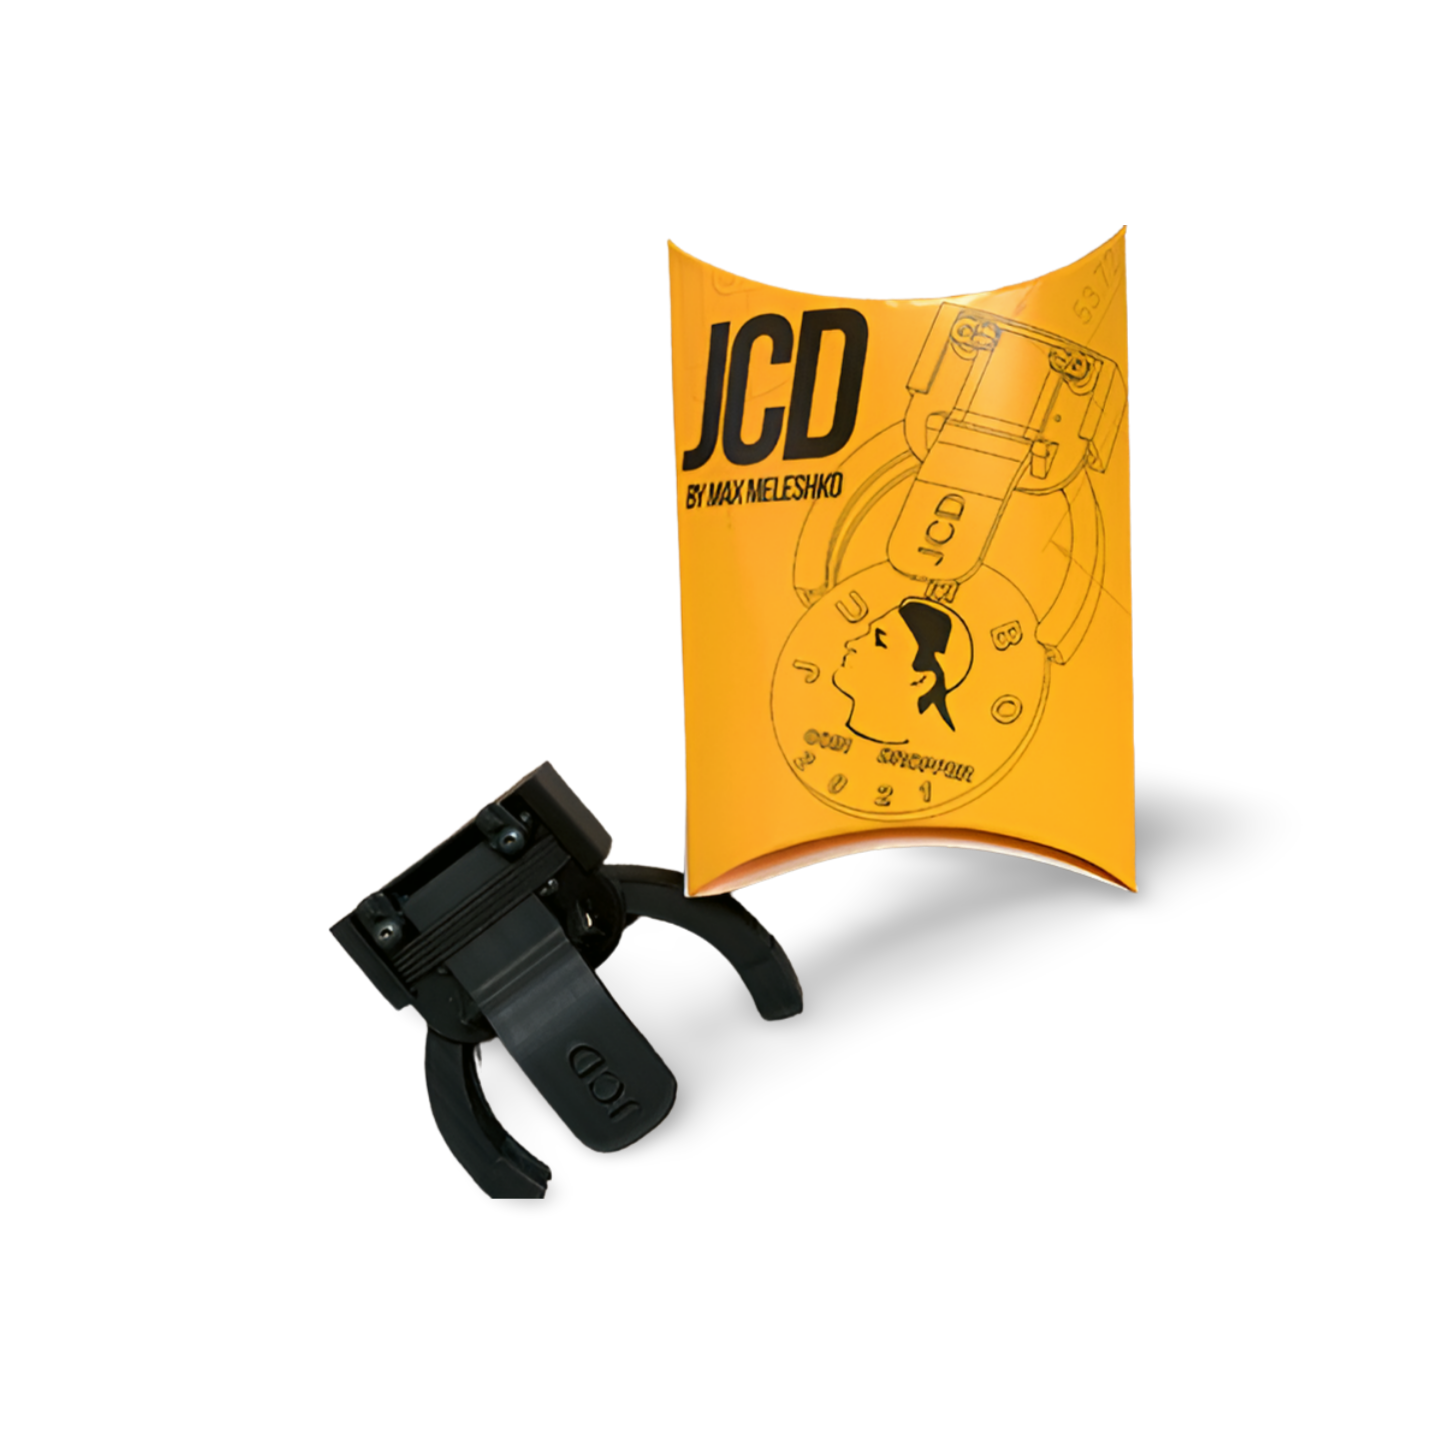 JCD Jumbo Coin Dropper by Max Meleshko - Trick